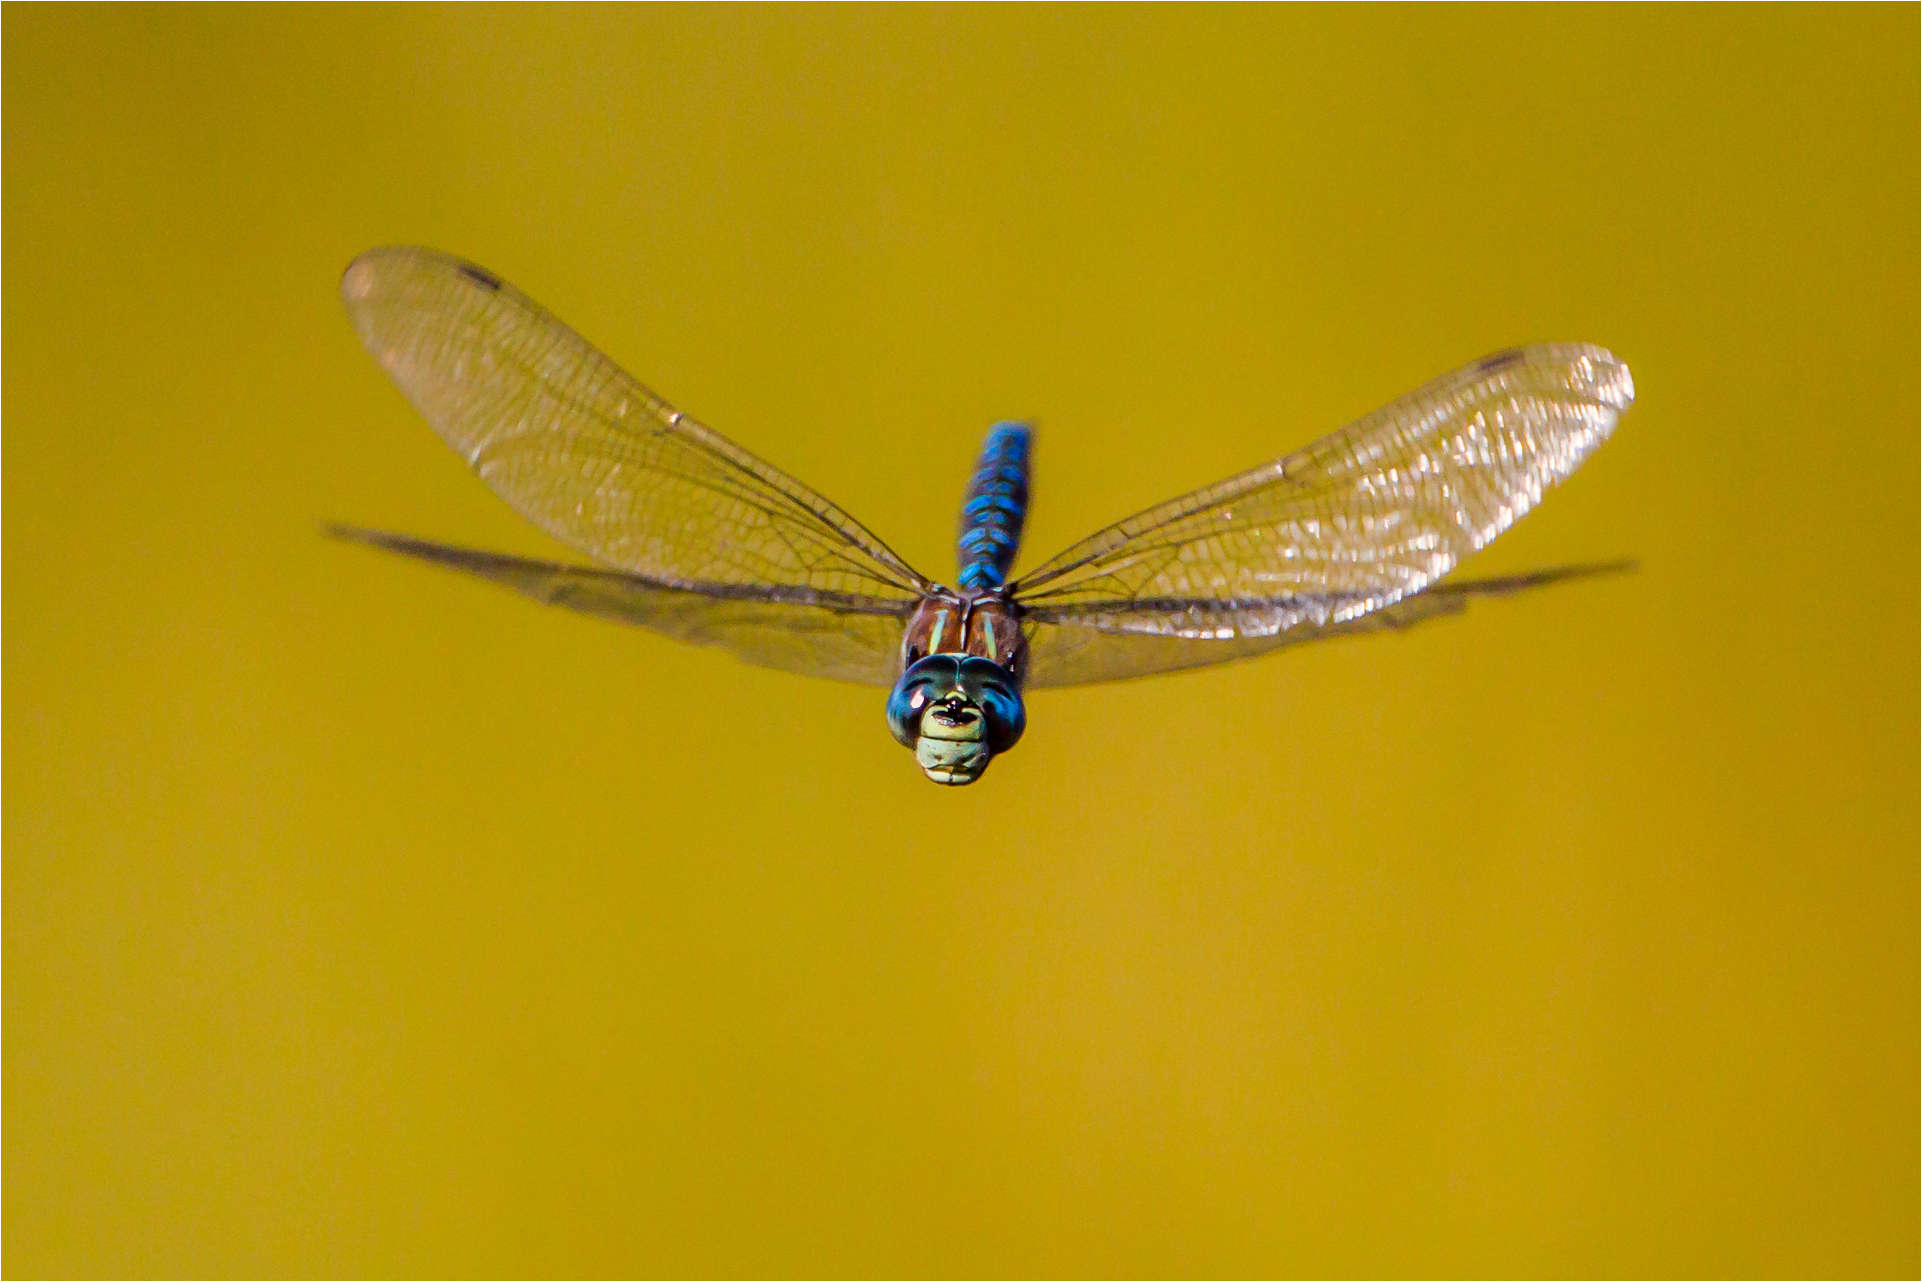 http://chrismartinphotography.files.wordpress.com/2012/08/dragonfly-showdown-c2a9-christopher-martin-3986-2.jpg